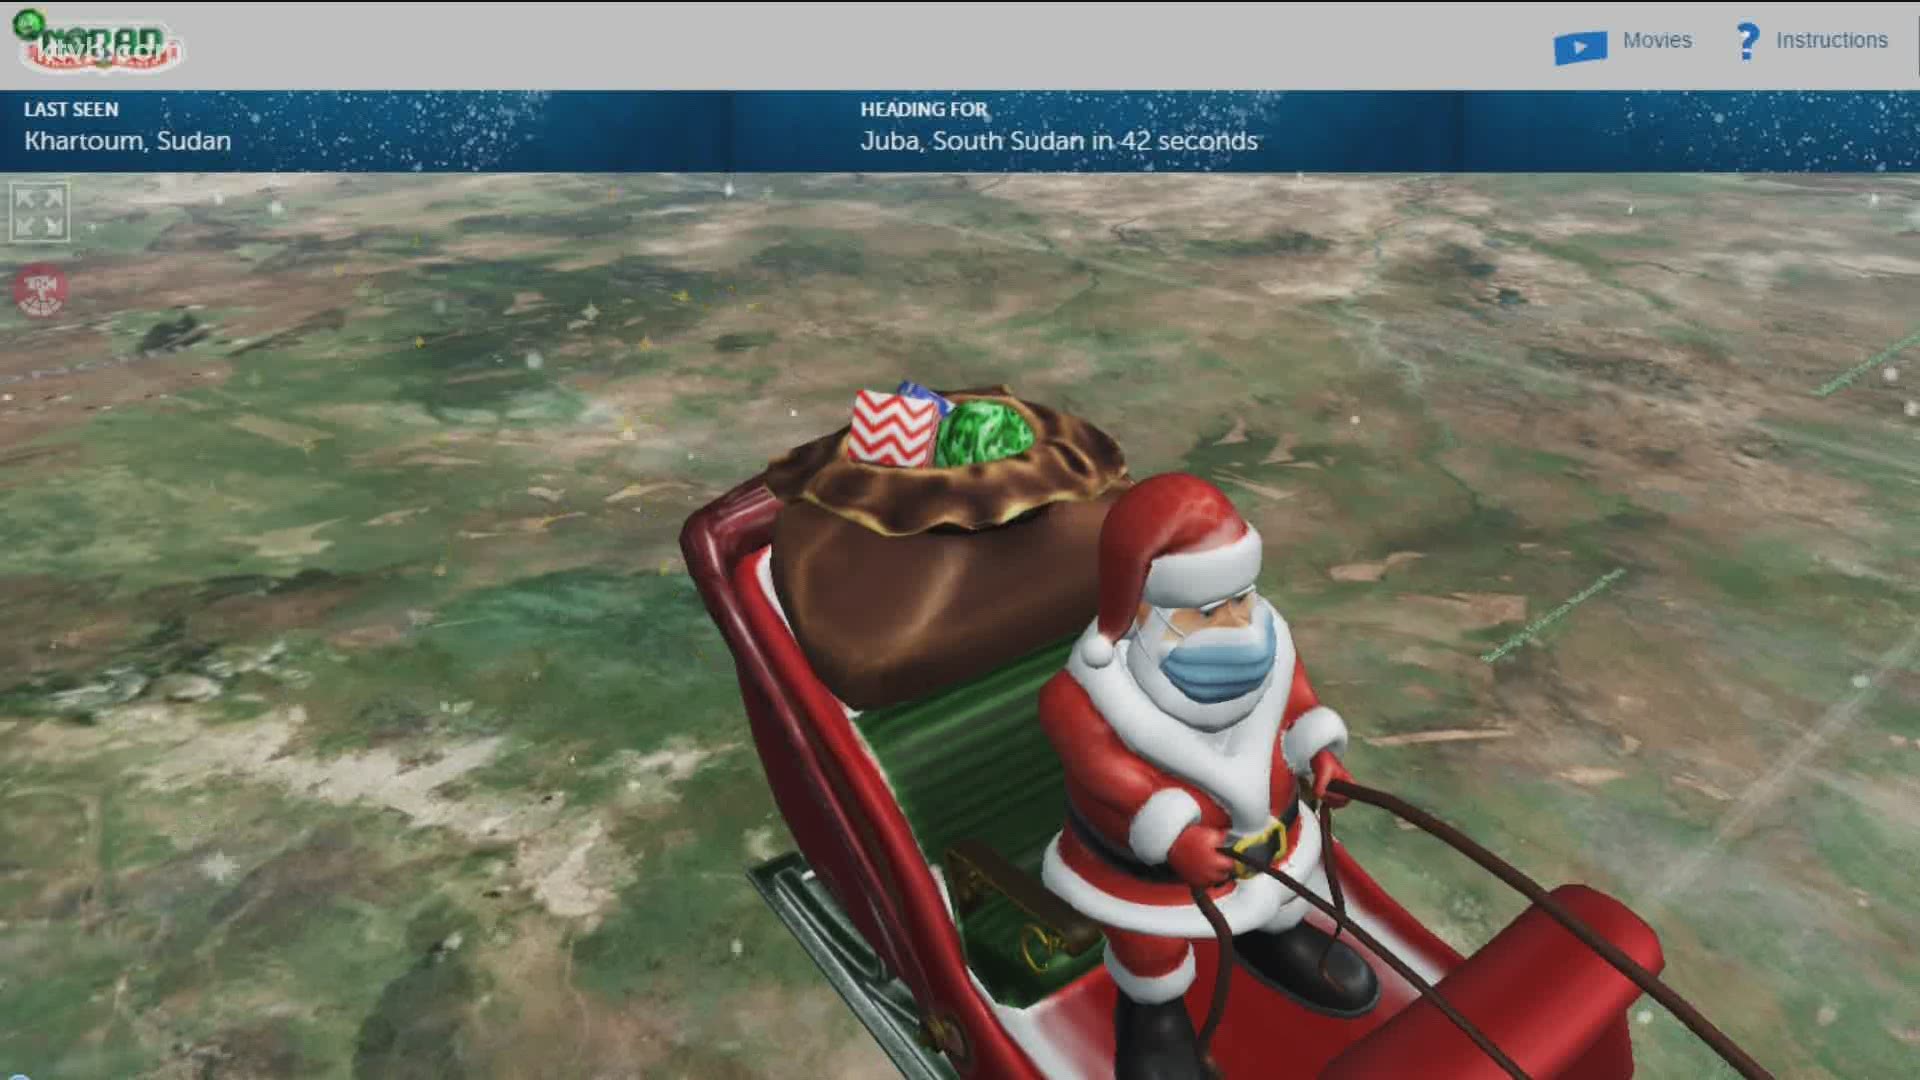 LIVE NORAD Tracks Santa Claus on global Christmas trip